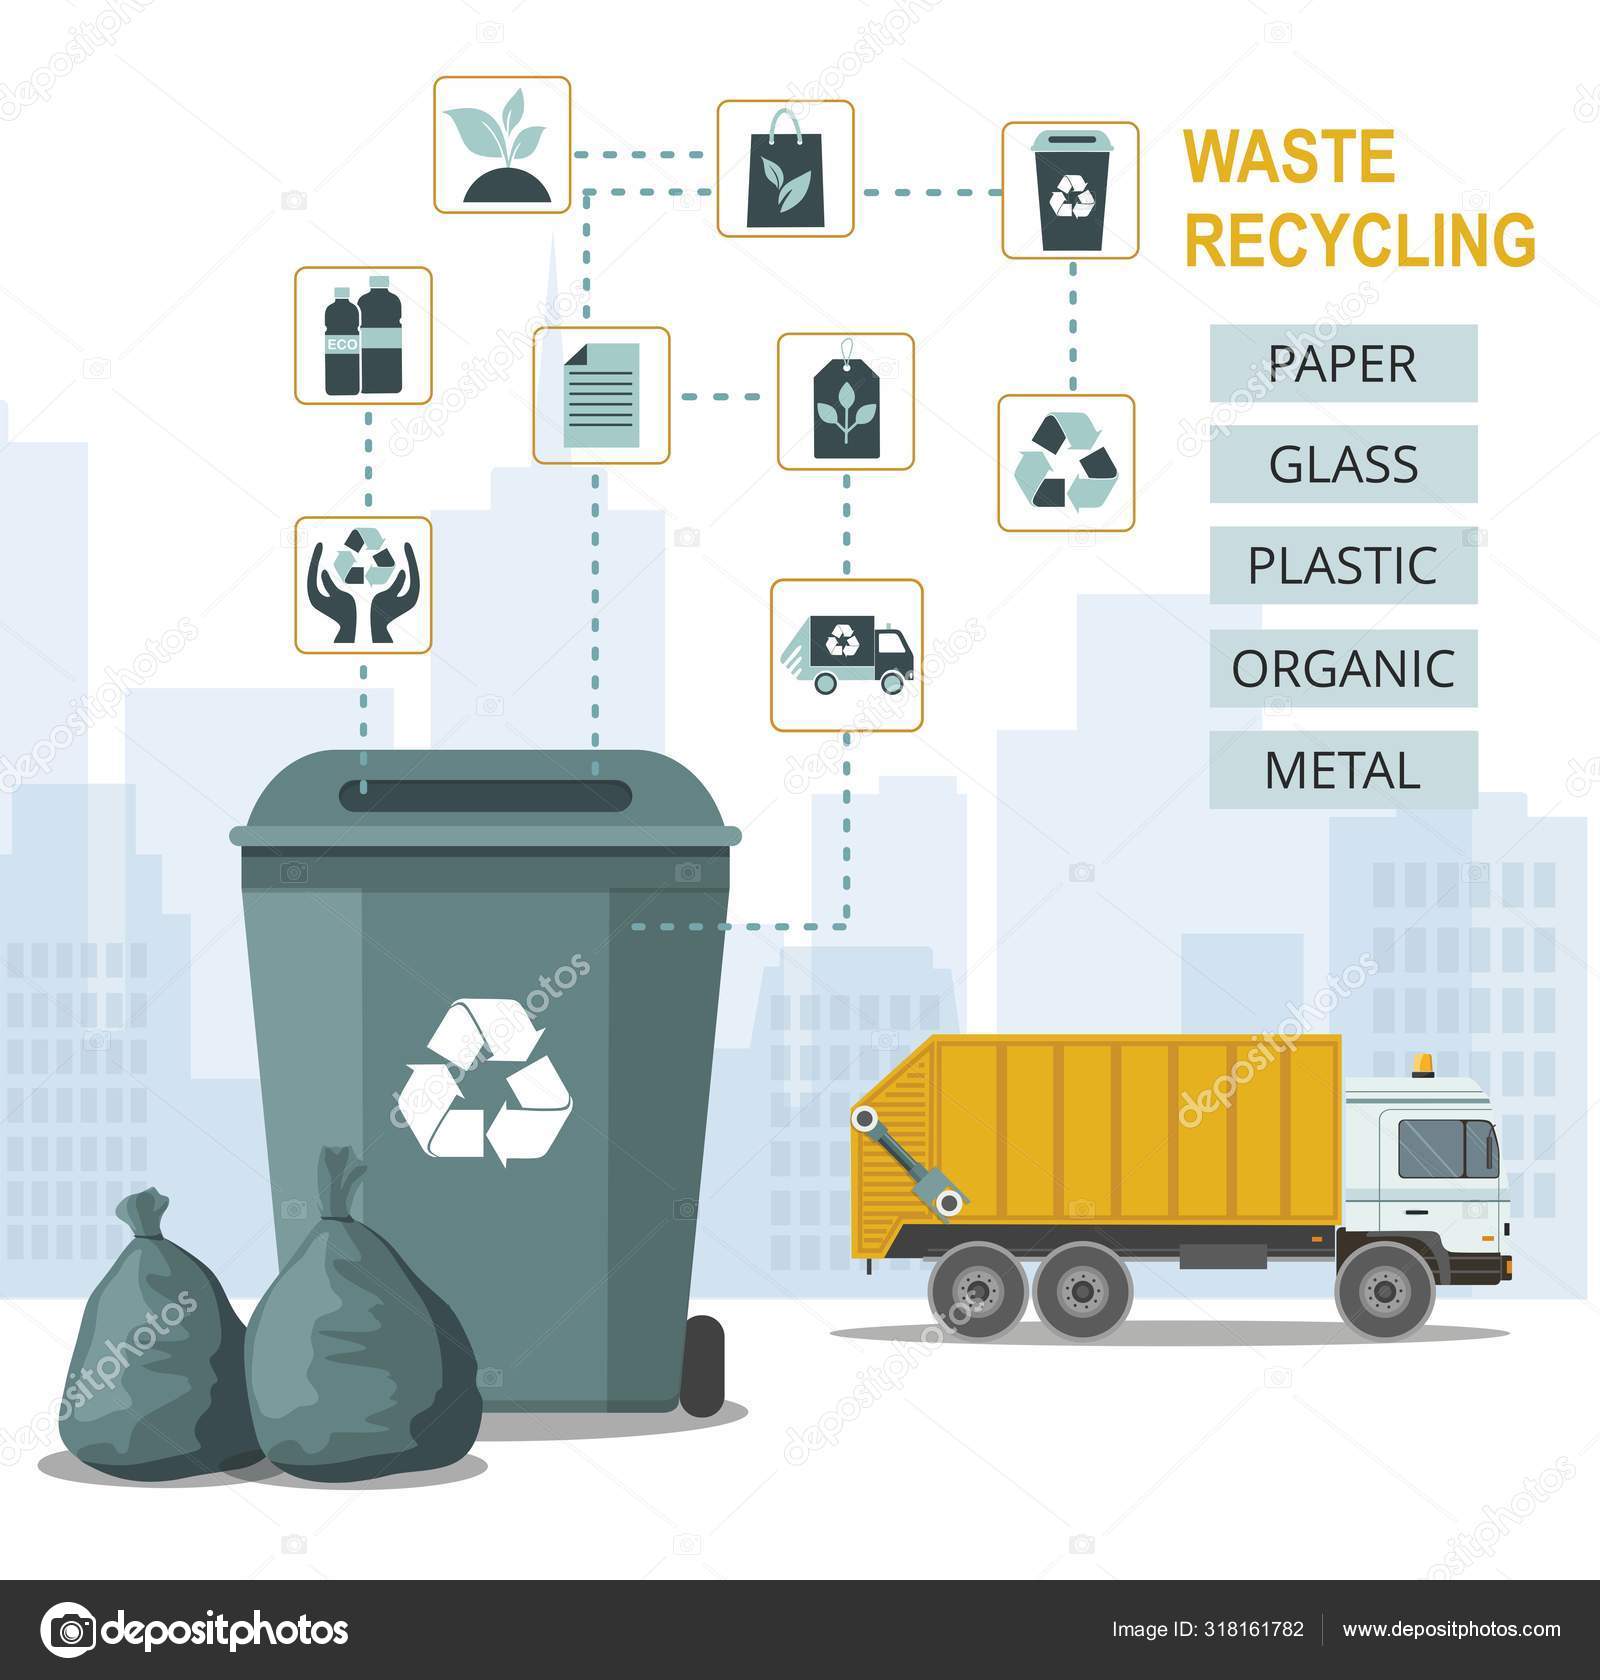 https://st3.depositphotos.com/13662830/31816/v/1600/depositphotos_318161782-stock-illustration-rubbish-bin-for-recycling-different.jpg